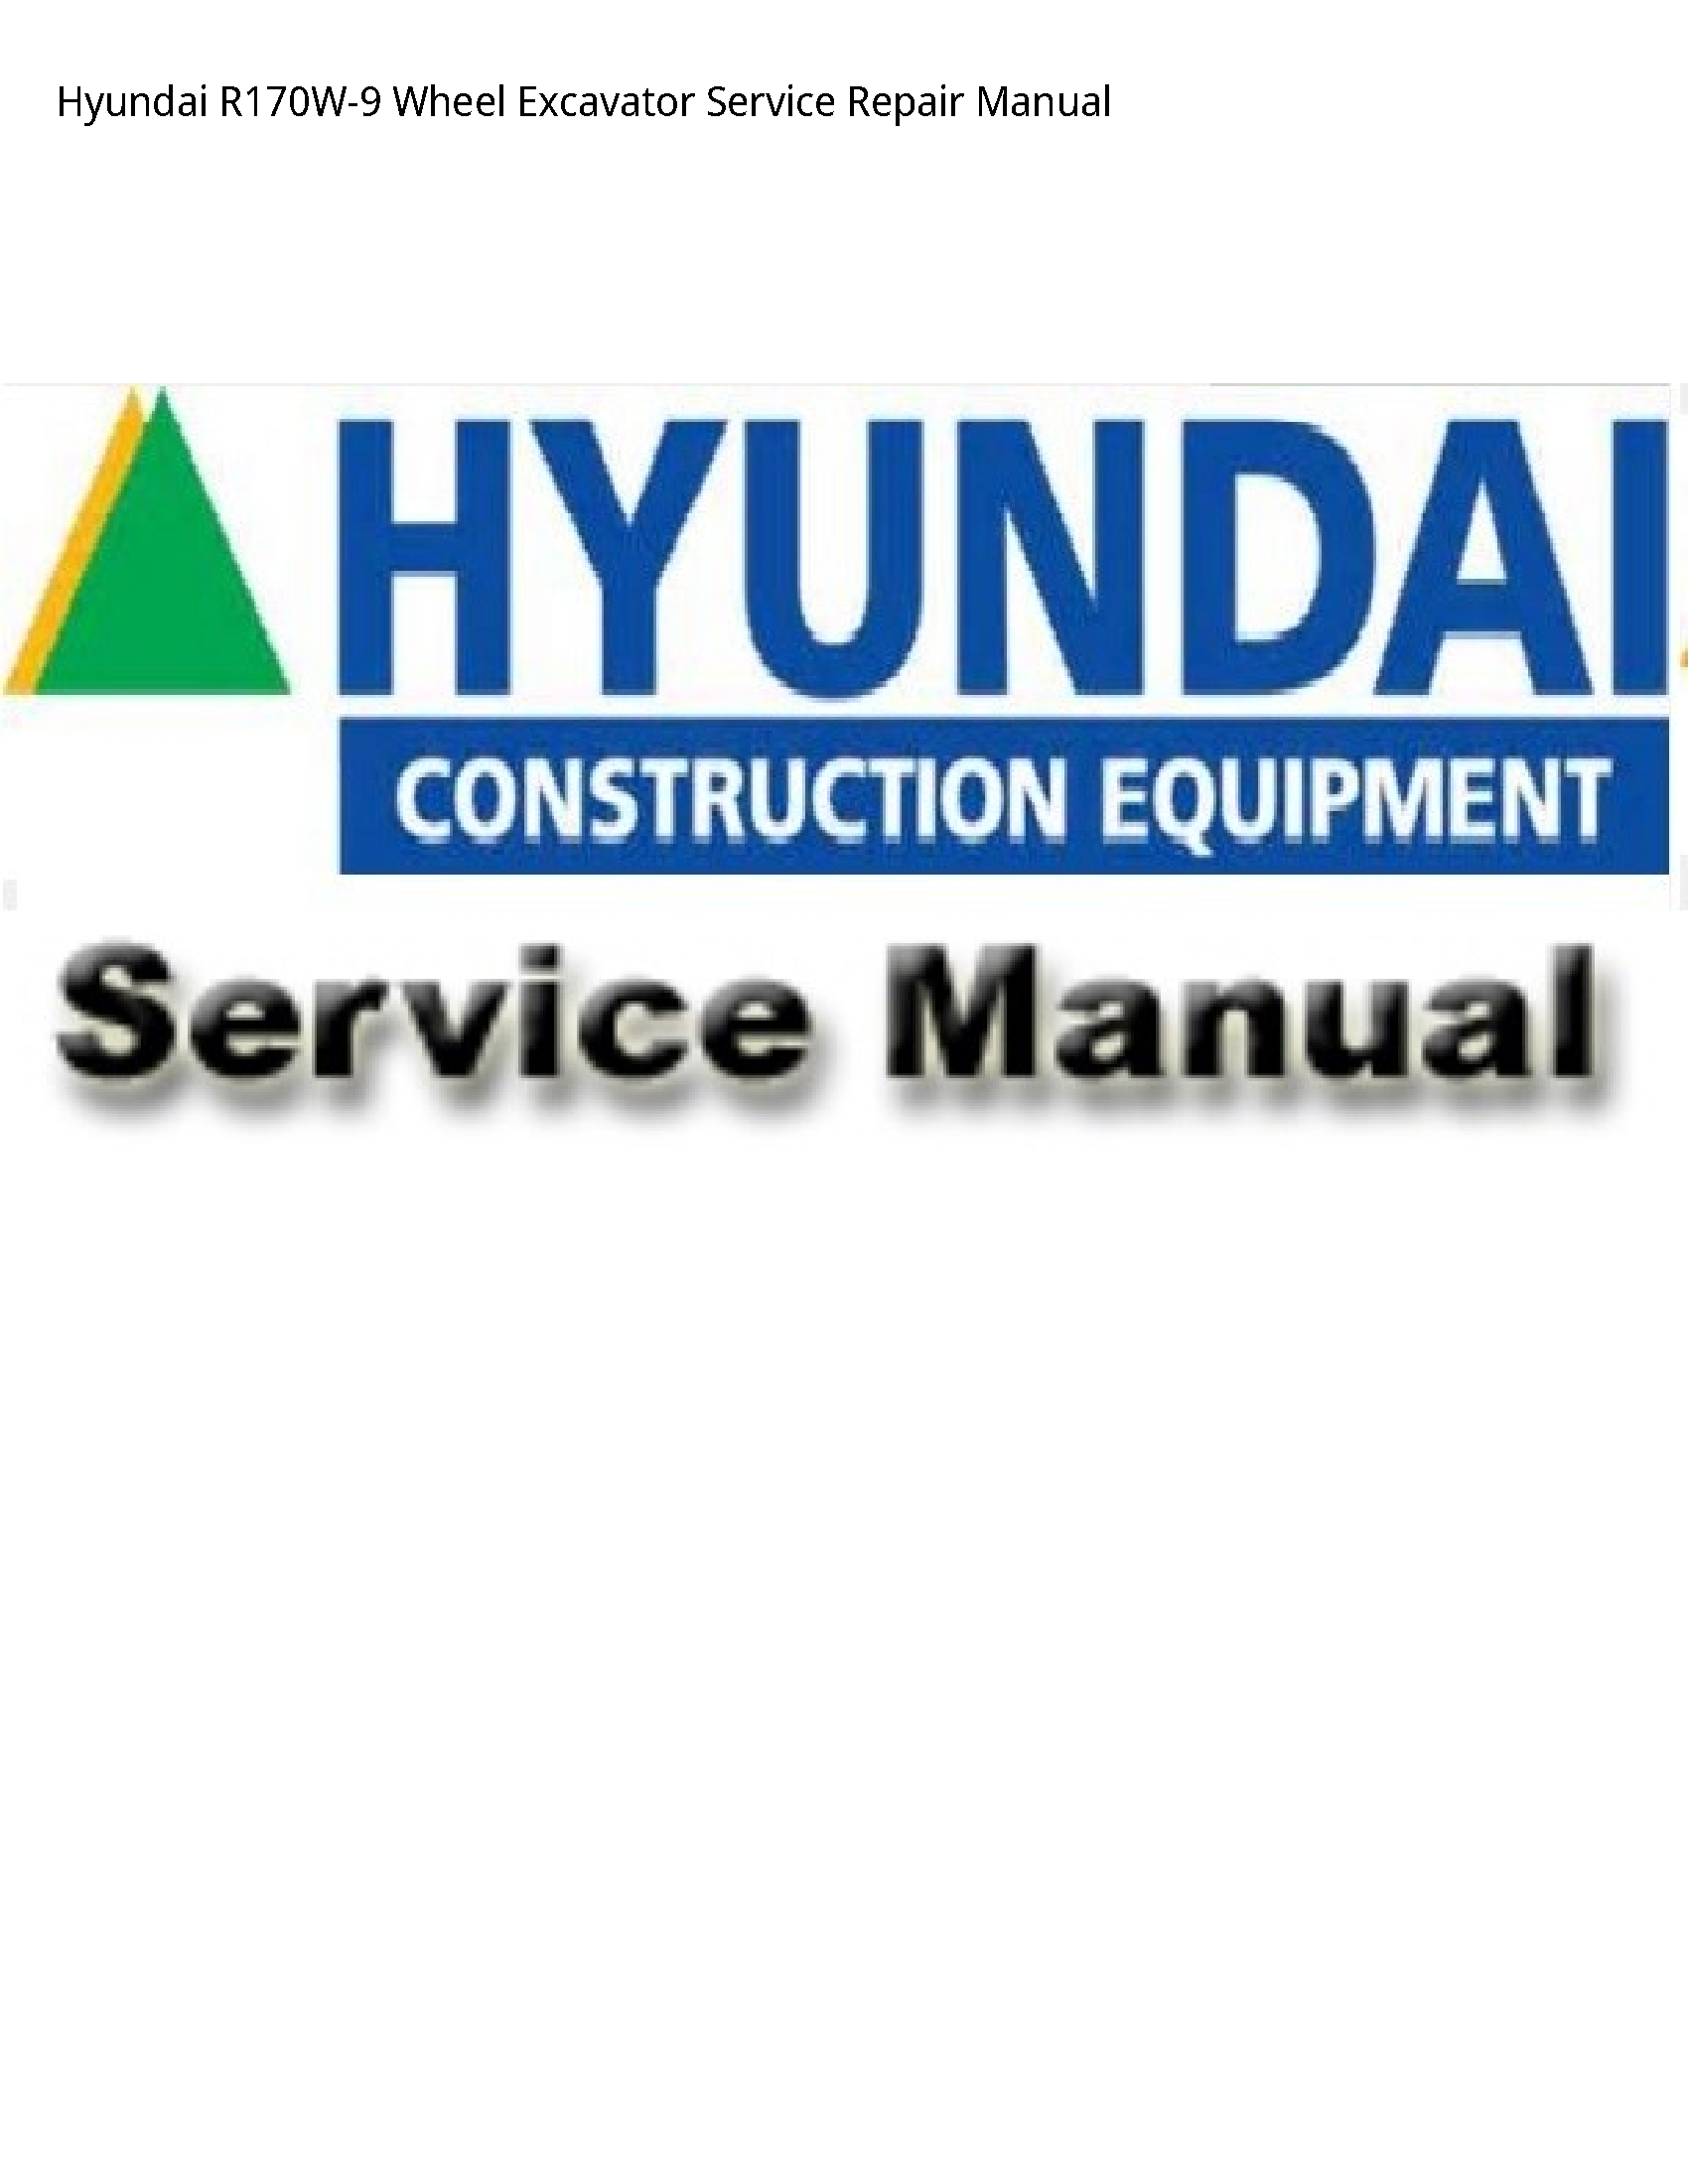 Hyundai R170W-9 Wheel Excavator manual